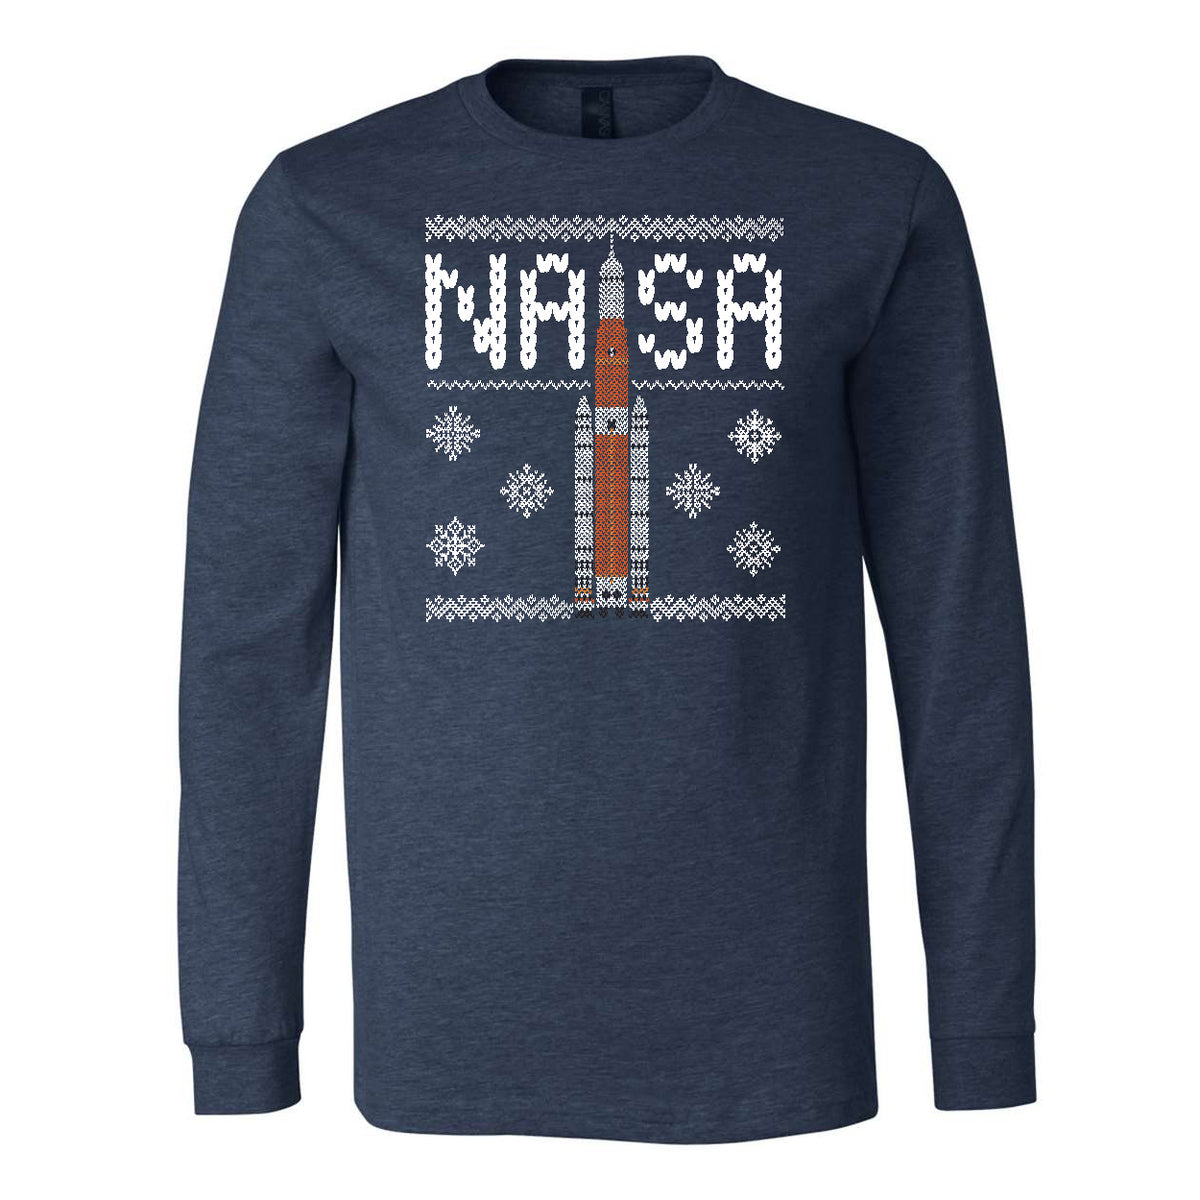 NASA Rocket Sweater Long Sleeve T-shirt